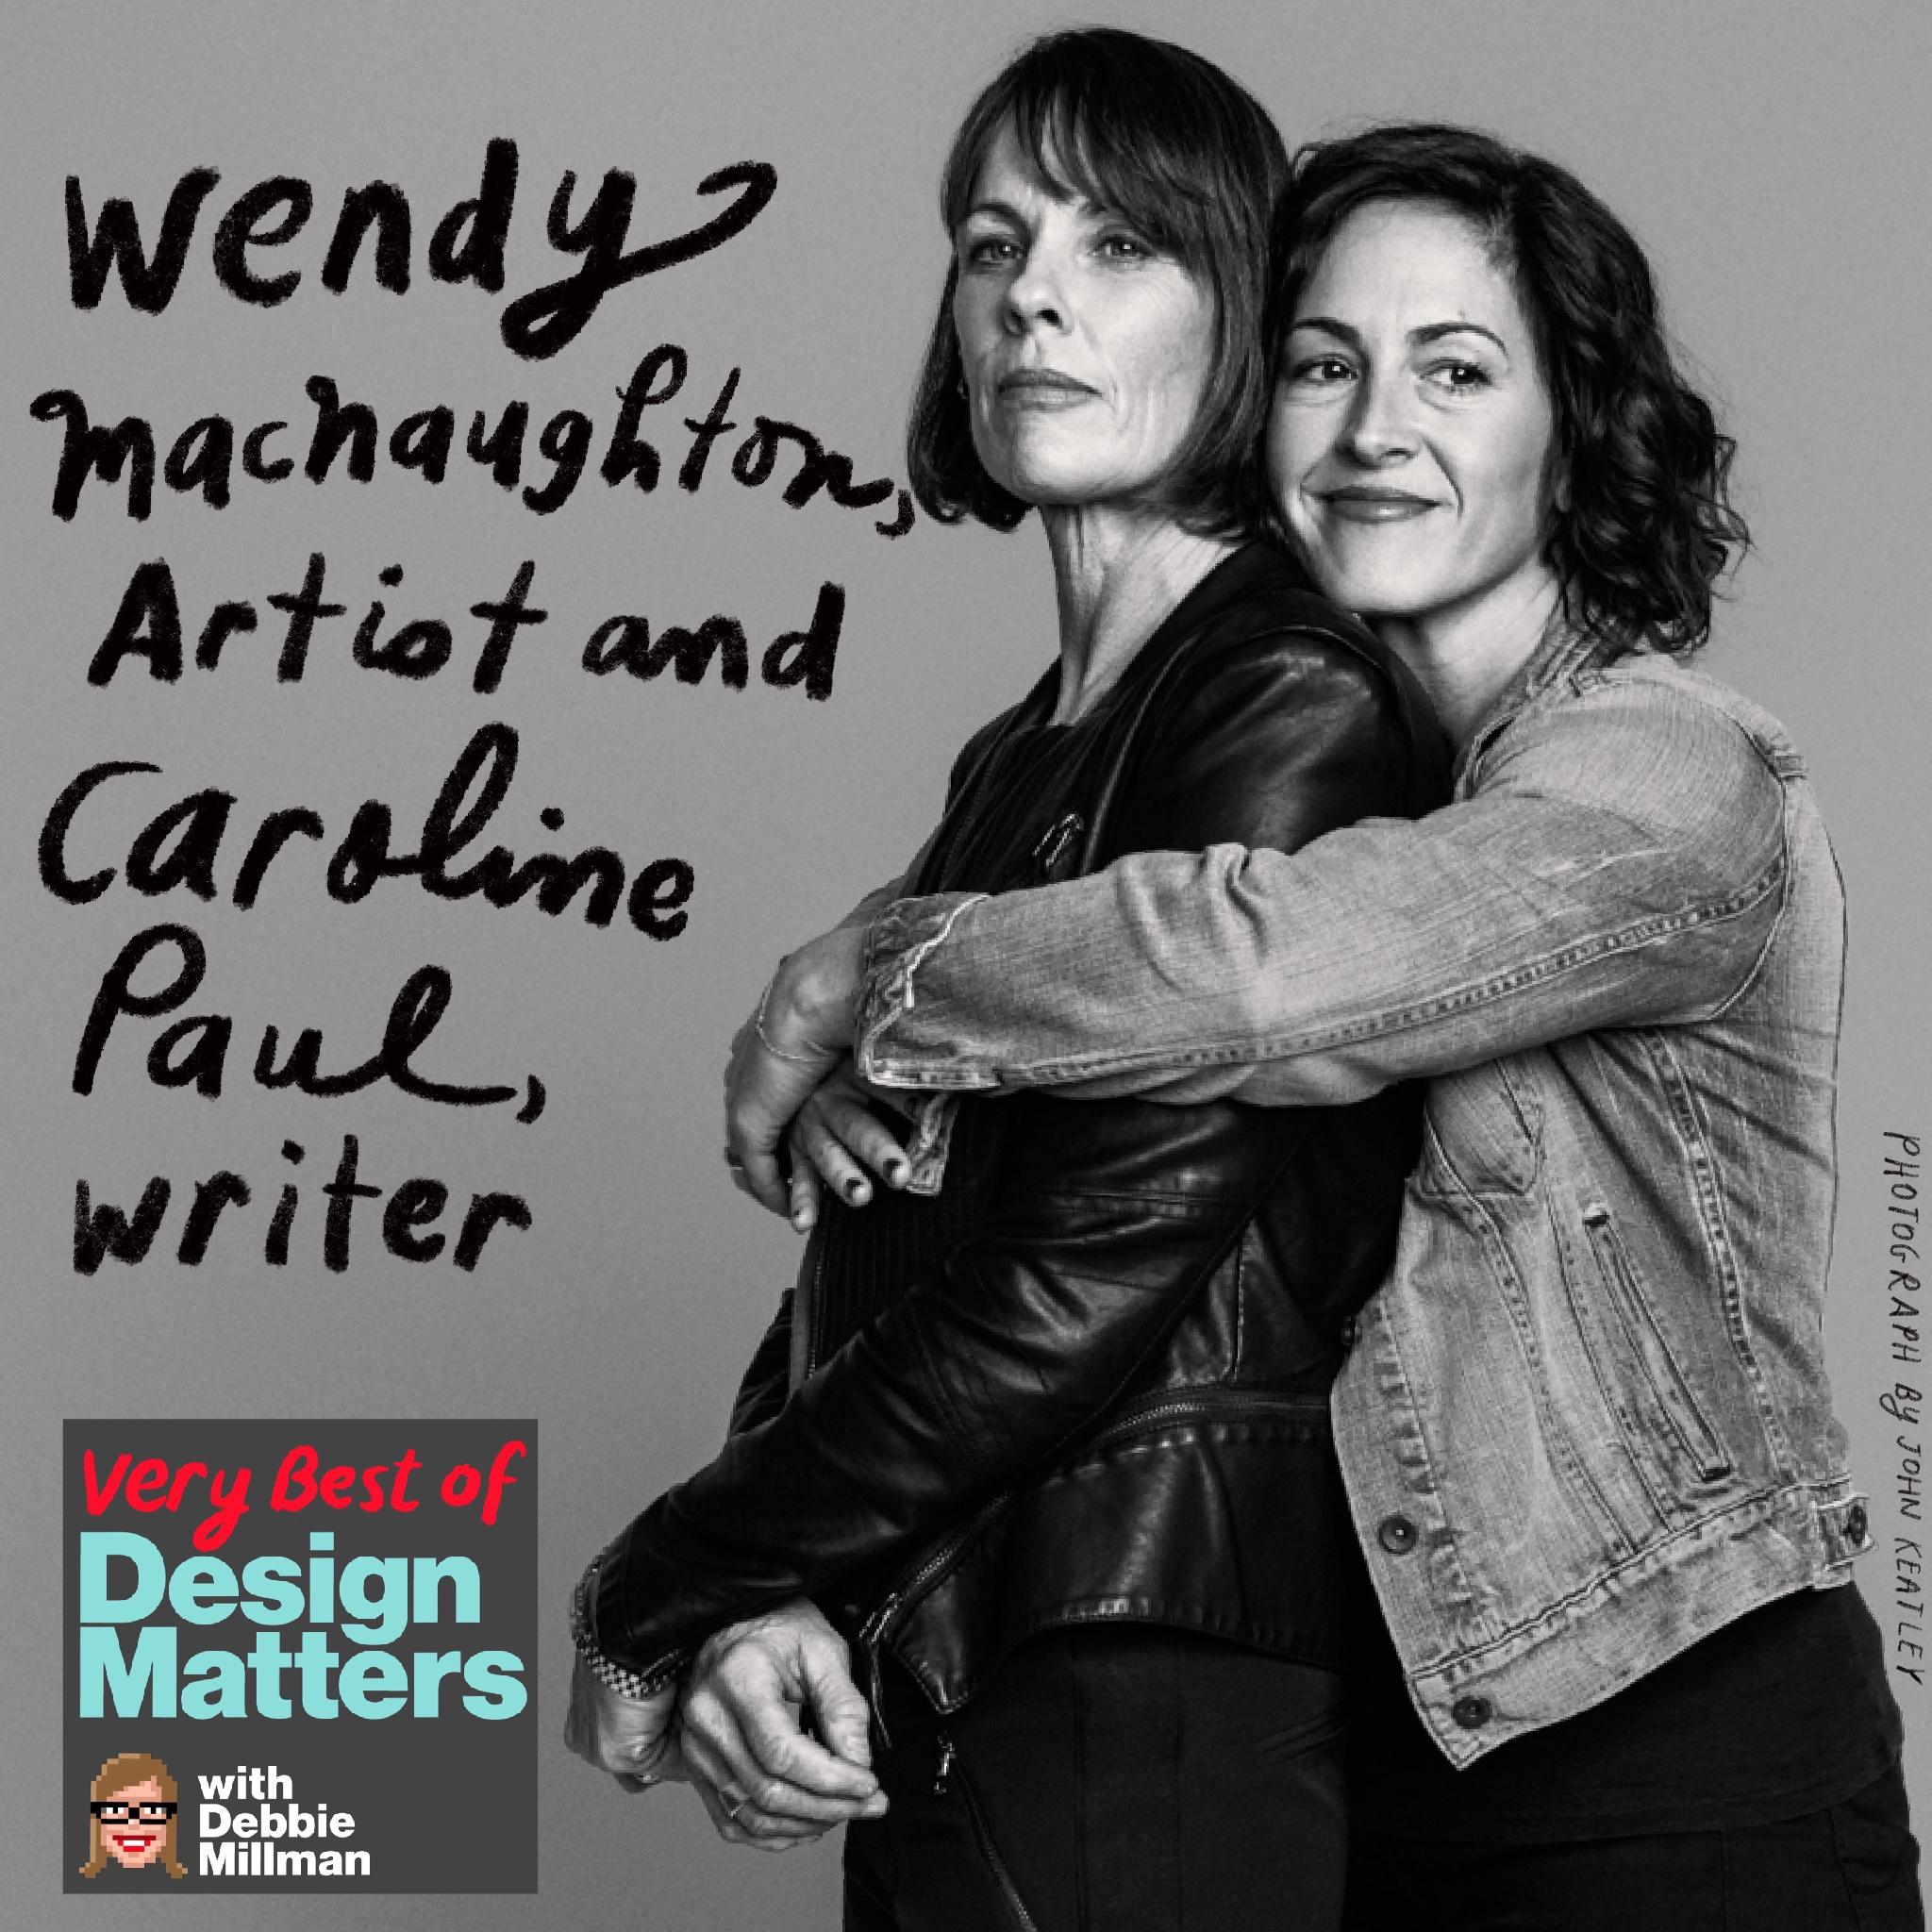 Thumbnail for "Best of Design Matters: Wendy MacNaughton and Caroline Paul".